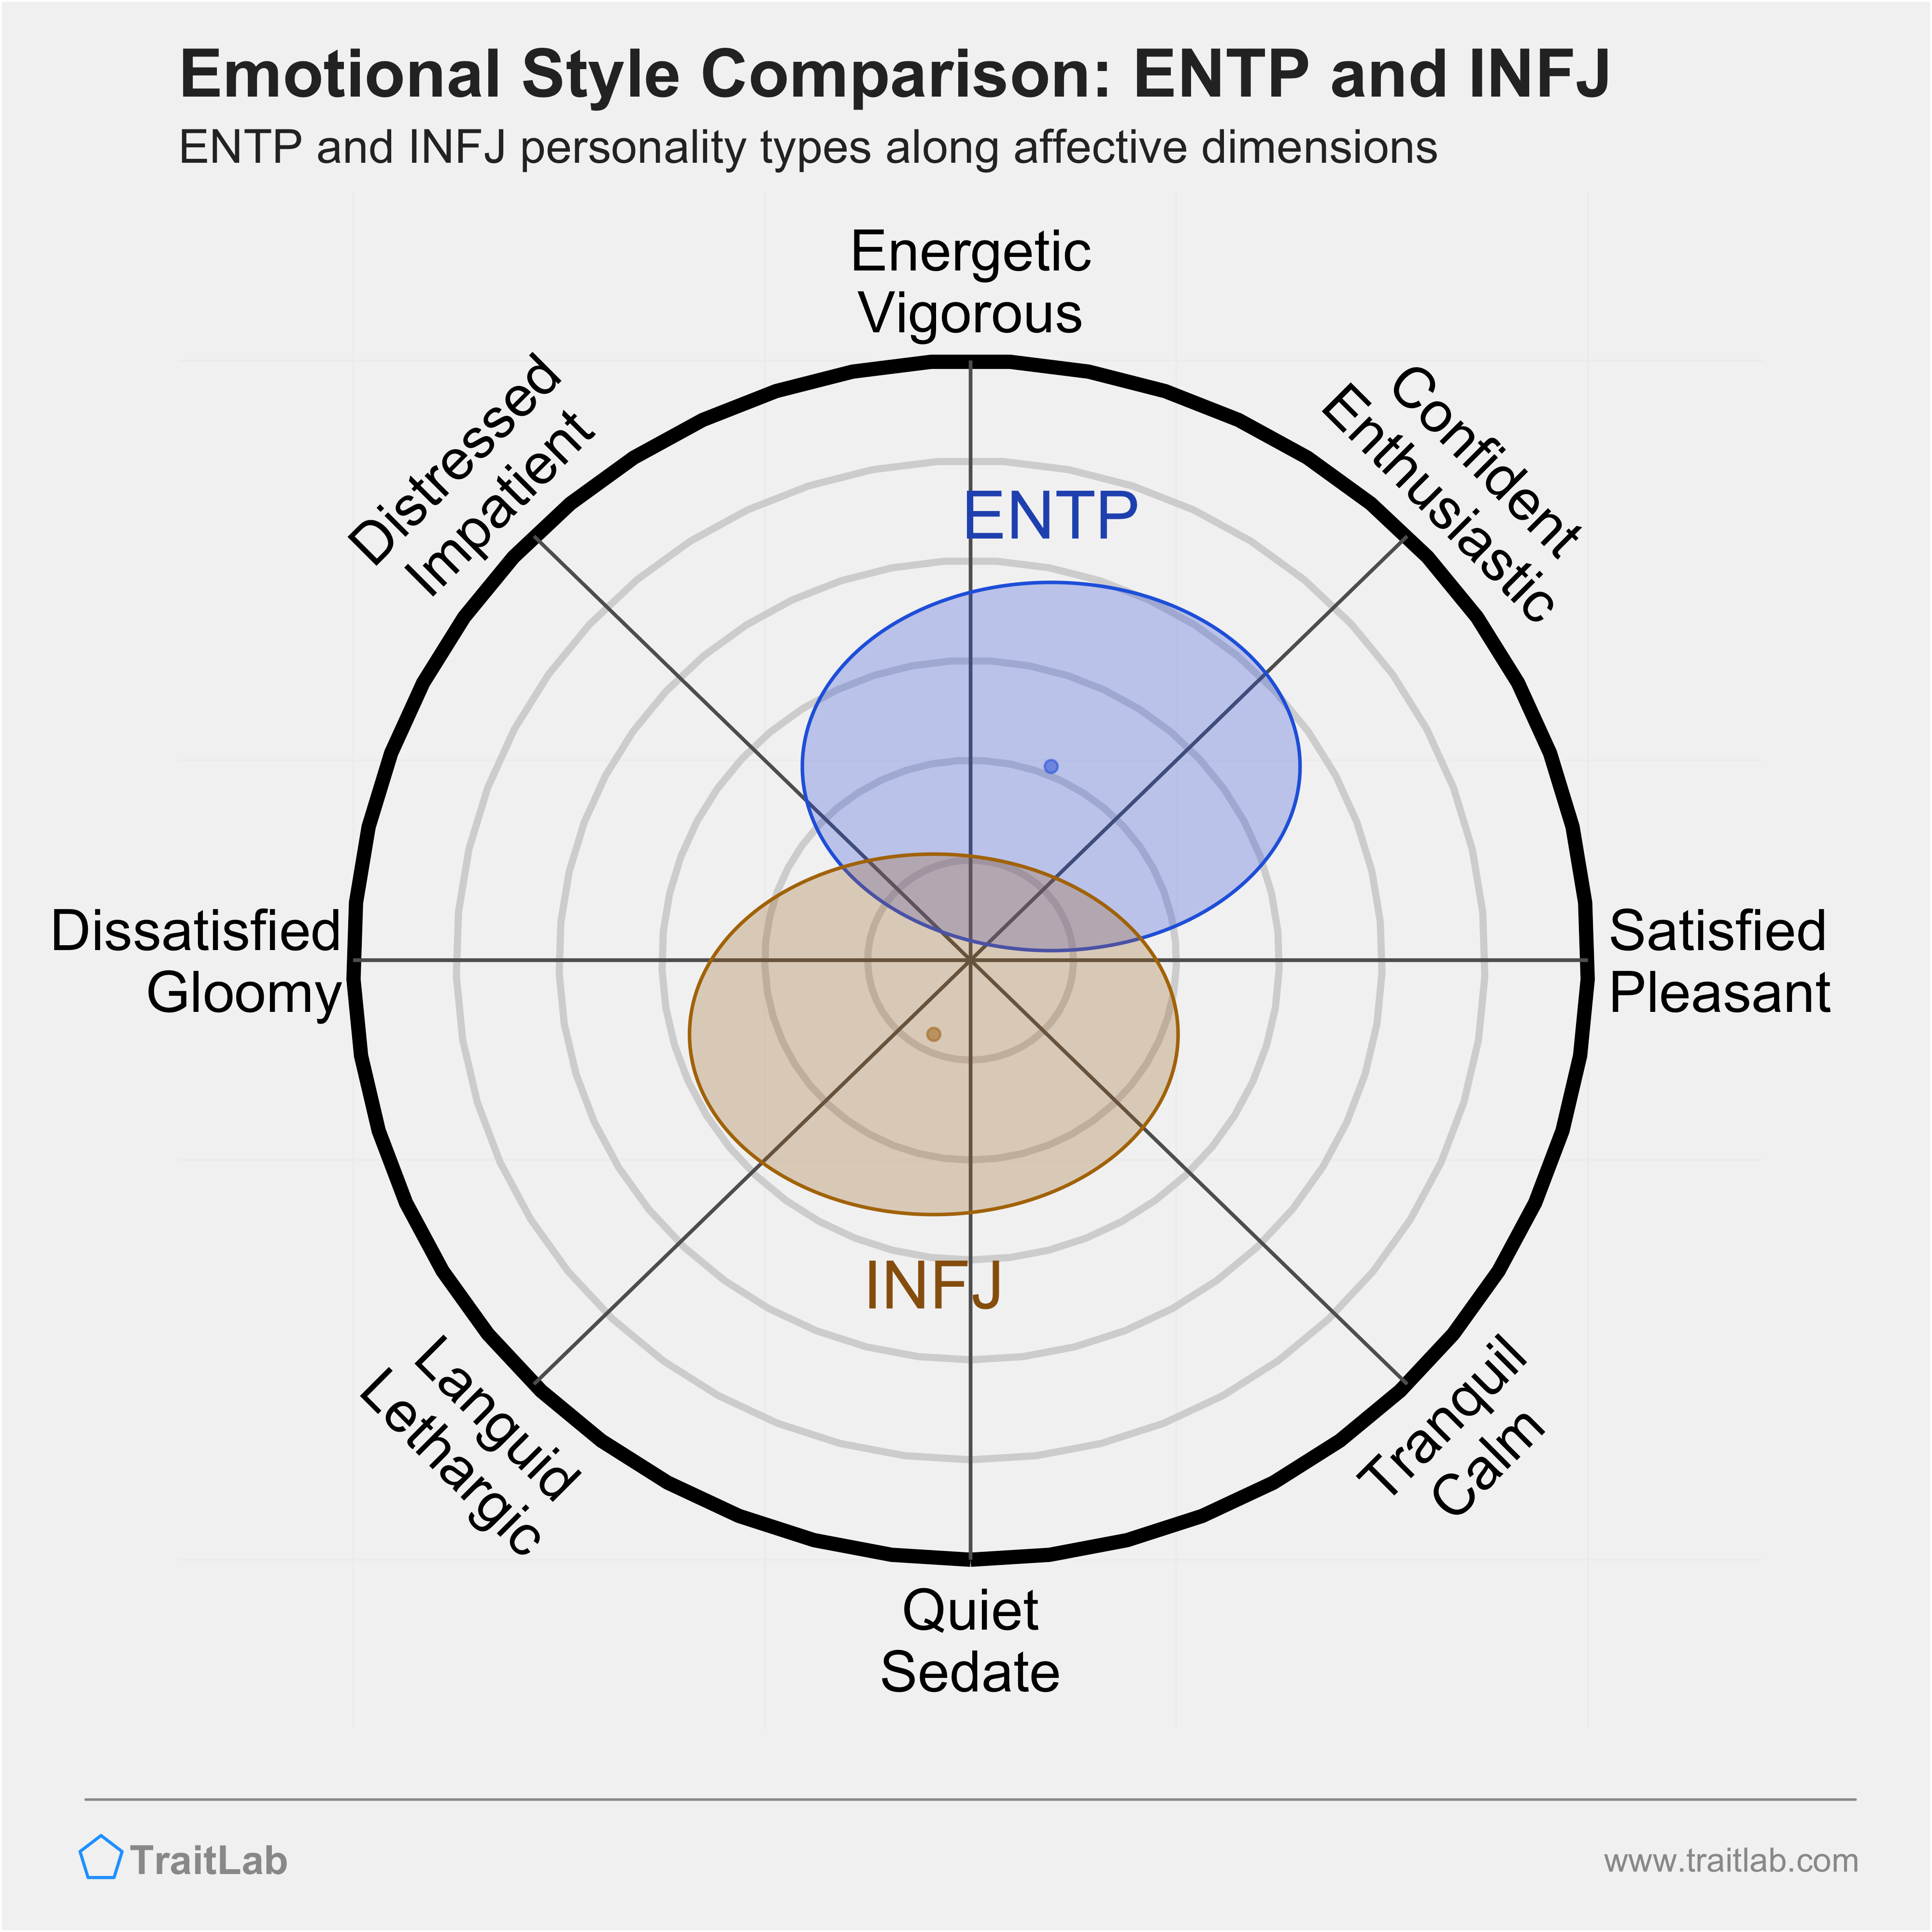 ENTP and INFJ comparison across emotional (affective) dimensions